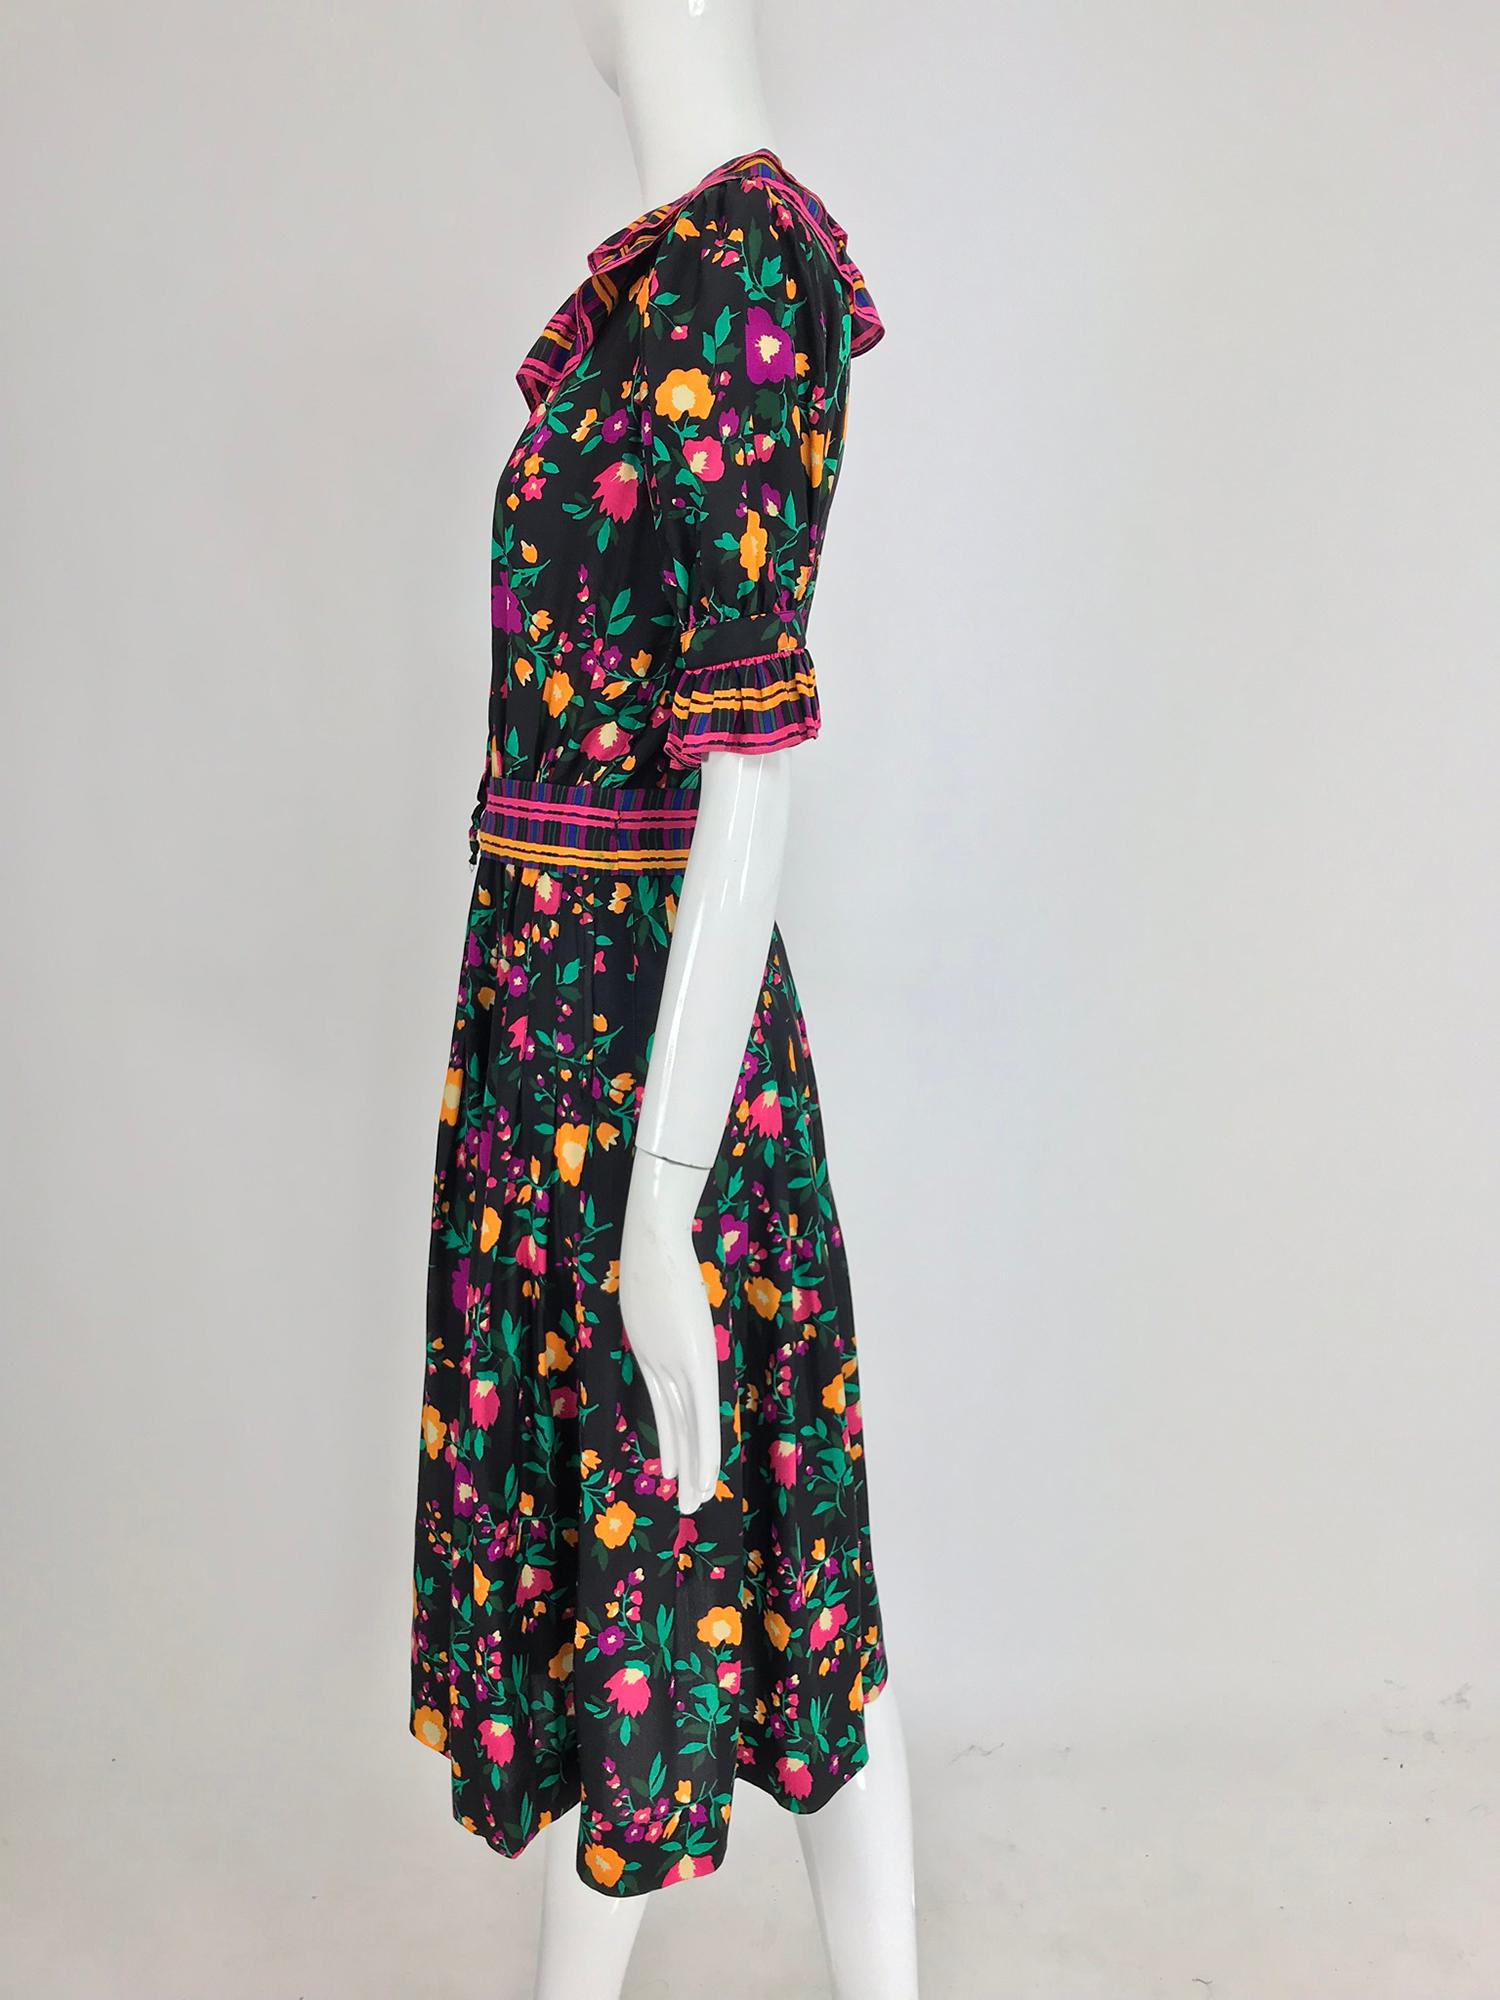 Yves Saint Laurent Rive Gauche floral silk mix print dress 1970s In Excellent Condition In West Palm Beach, FL